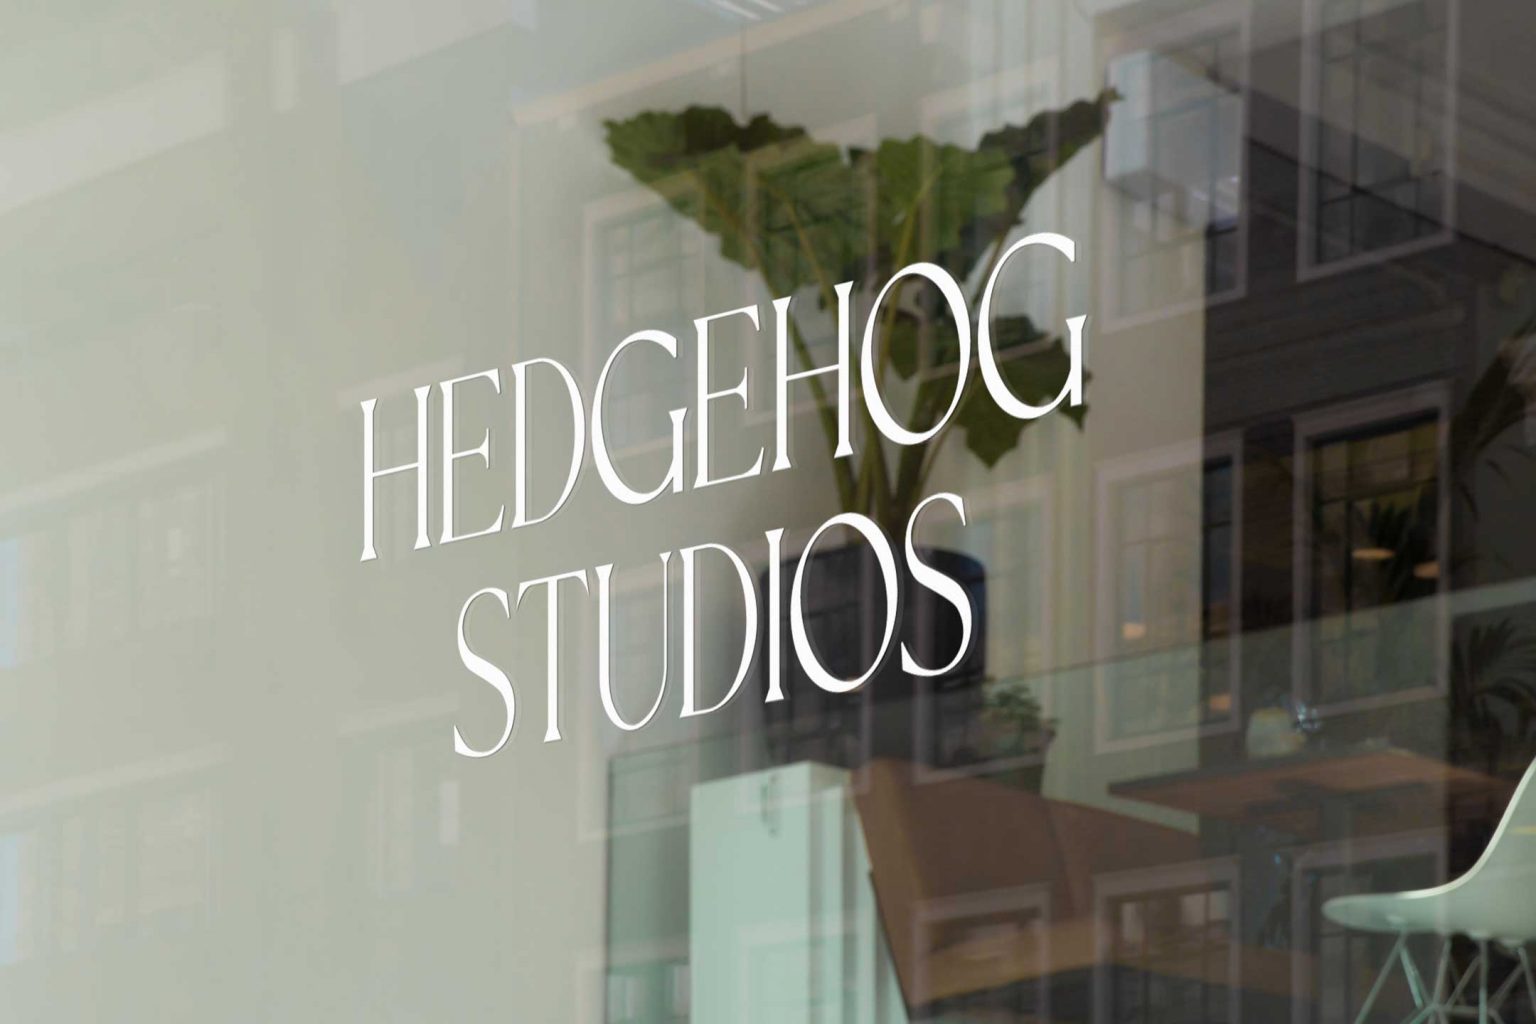 Hedgehog Studios' logo on a window